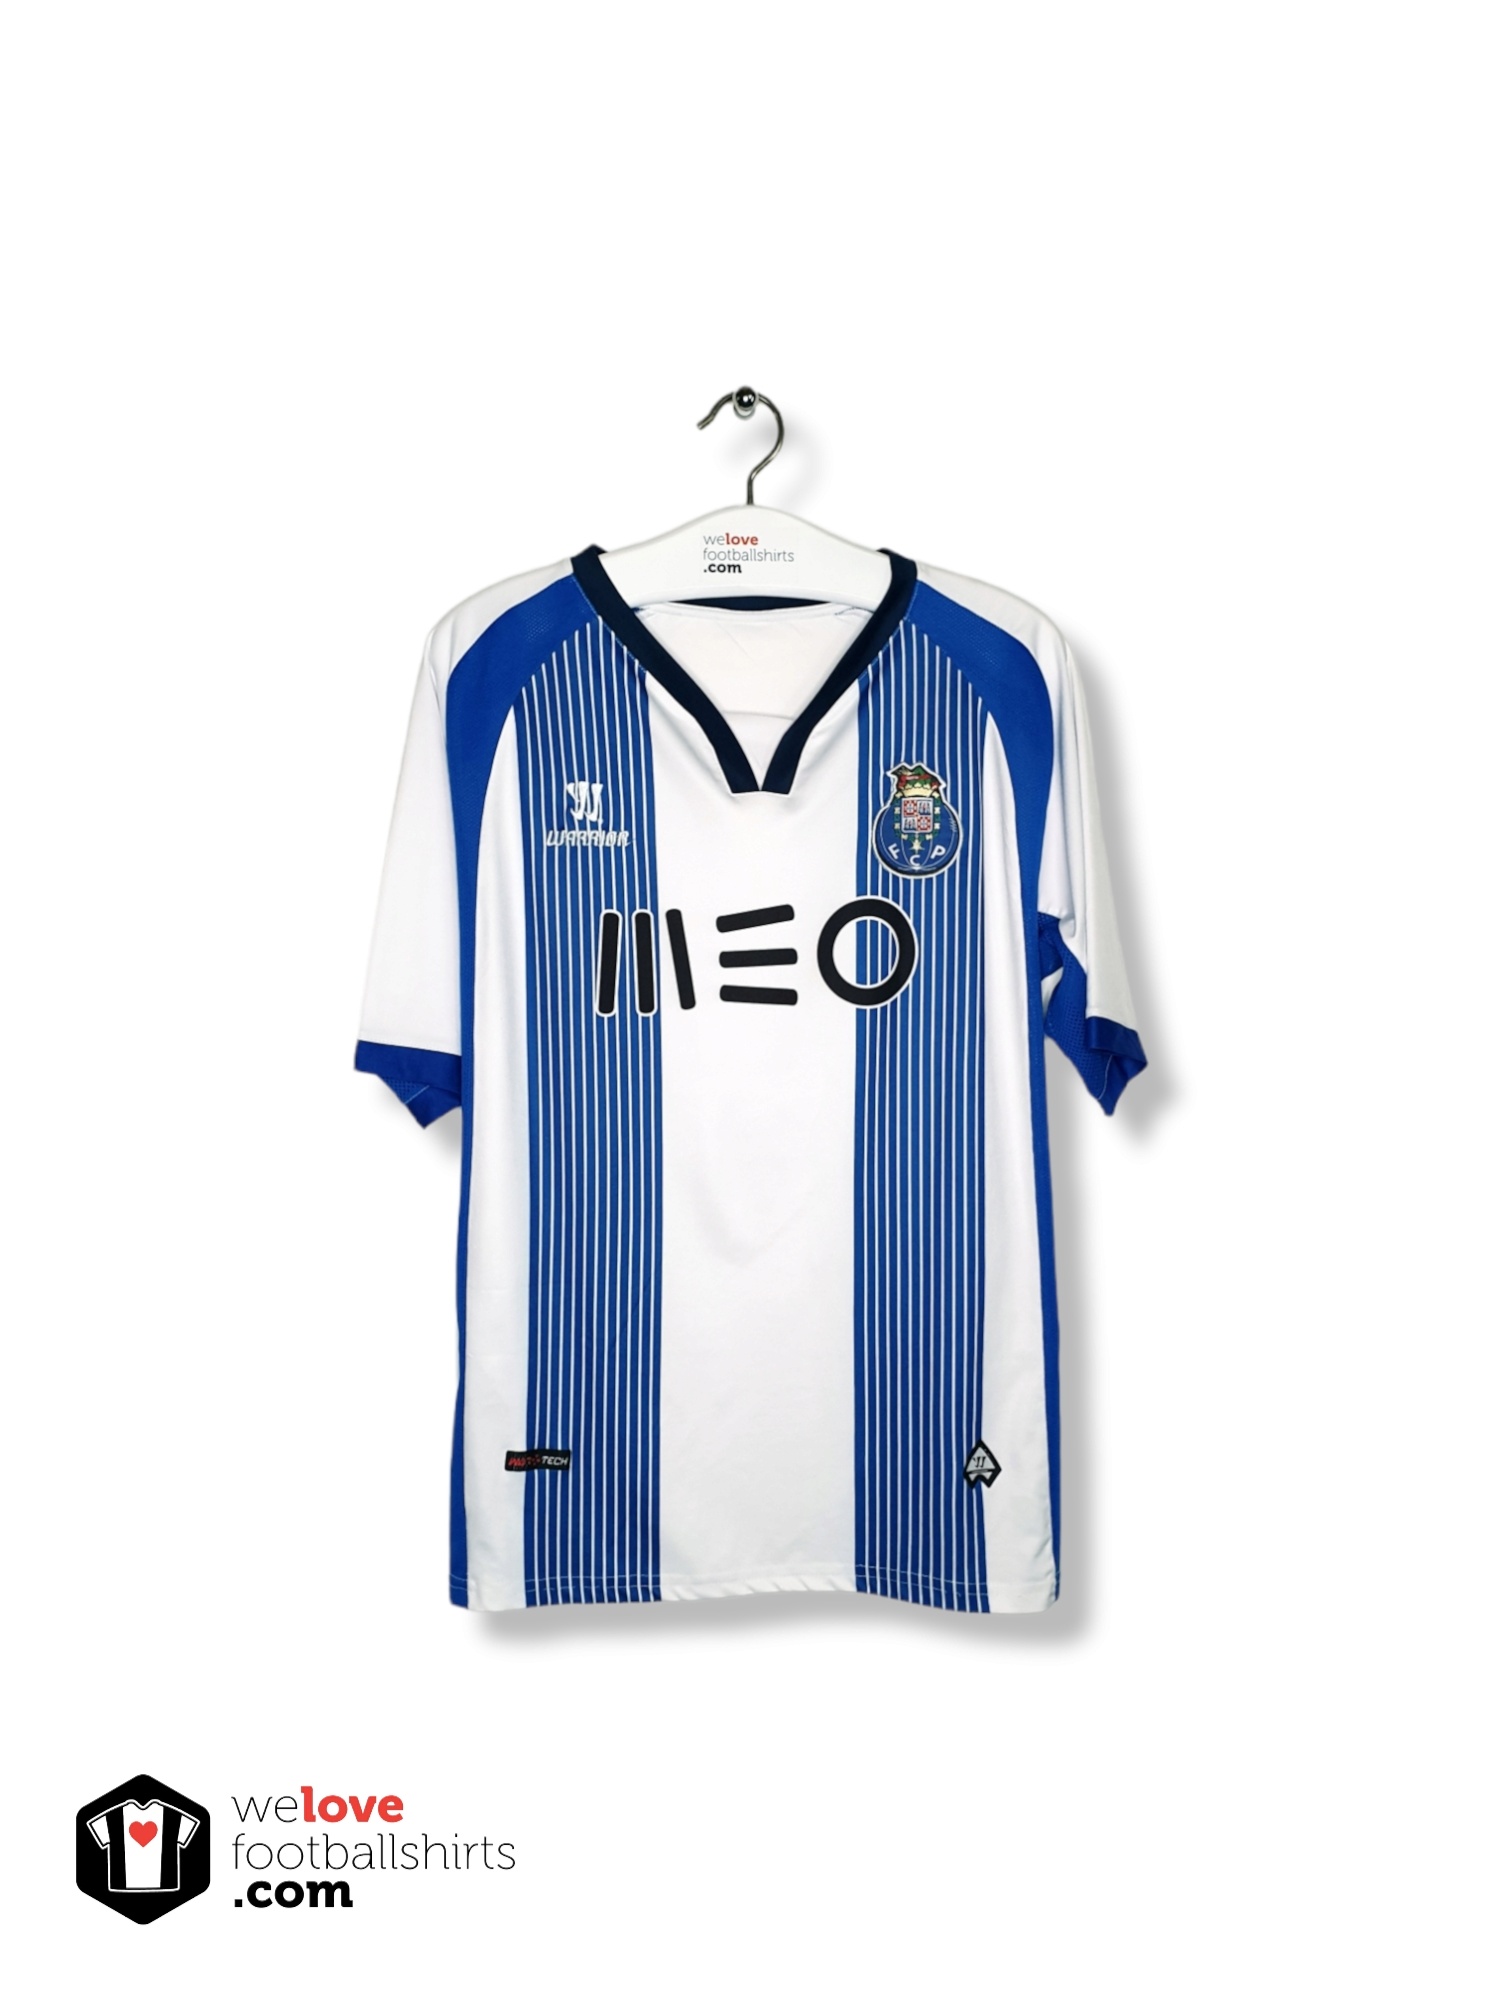 Warrior football shirt FC Porto 2014/15 - Welovefootballshirts.com